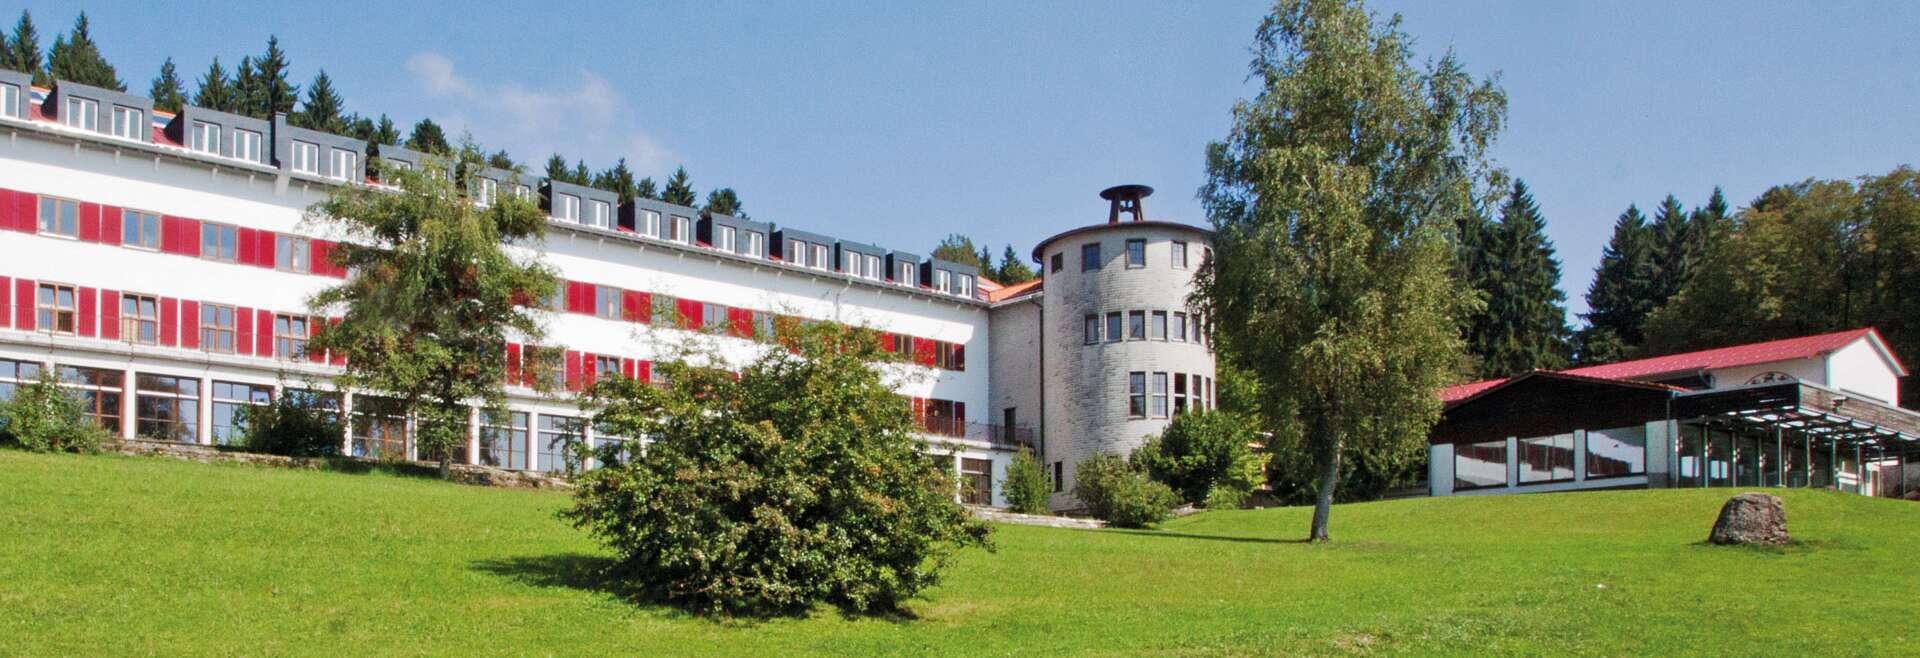 Séjour linguistique Allemagne, Humboldt Institut Lindenberg, Bâtiment scolaire